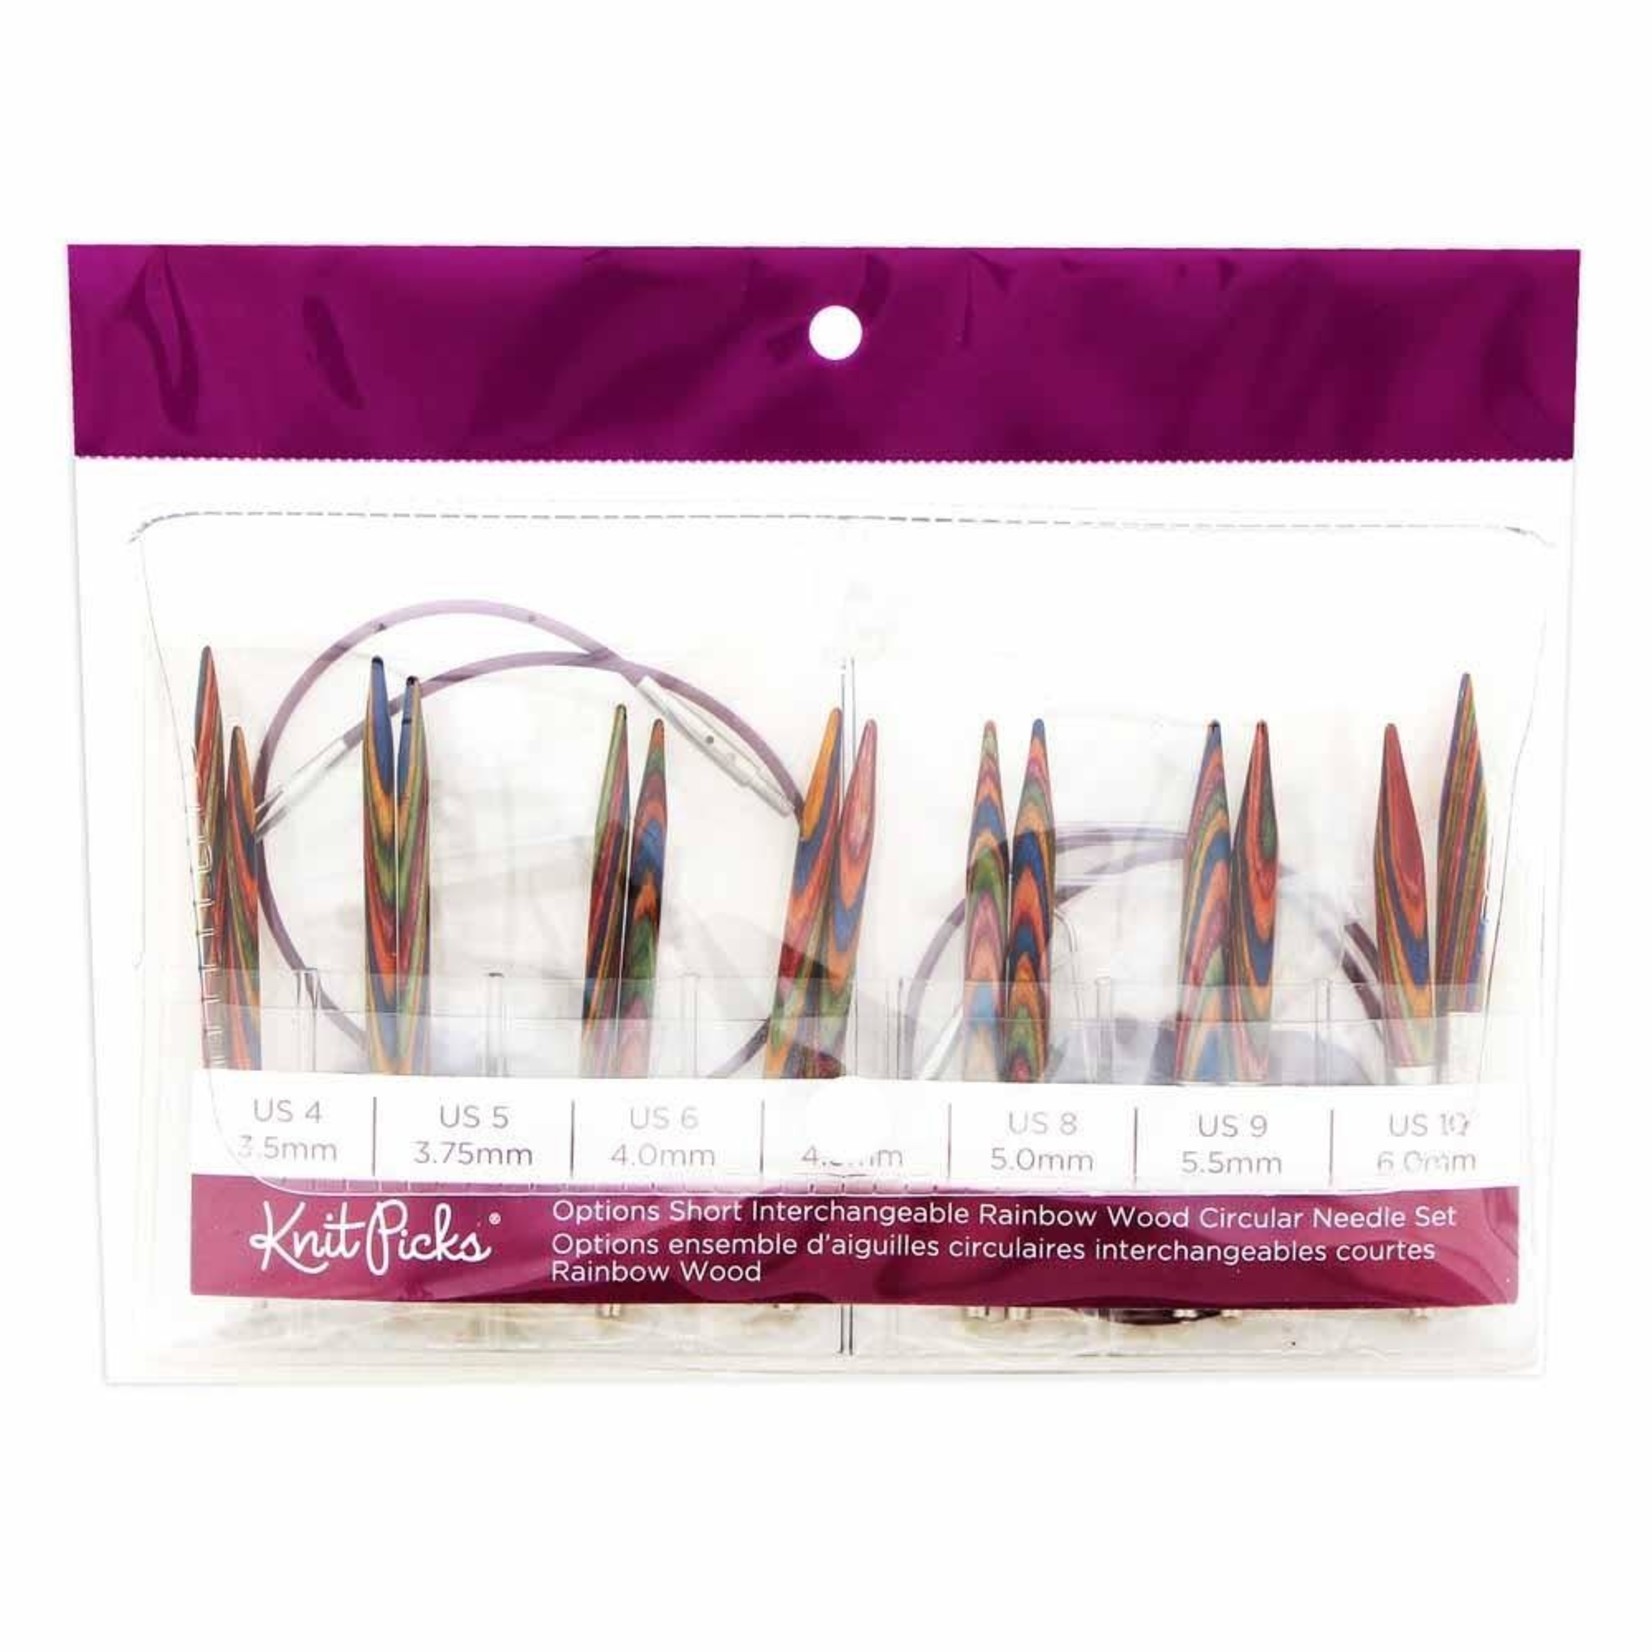 Knit Picks Options Short Interchangeable Needle Set by Knit Picks